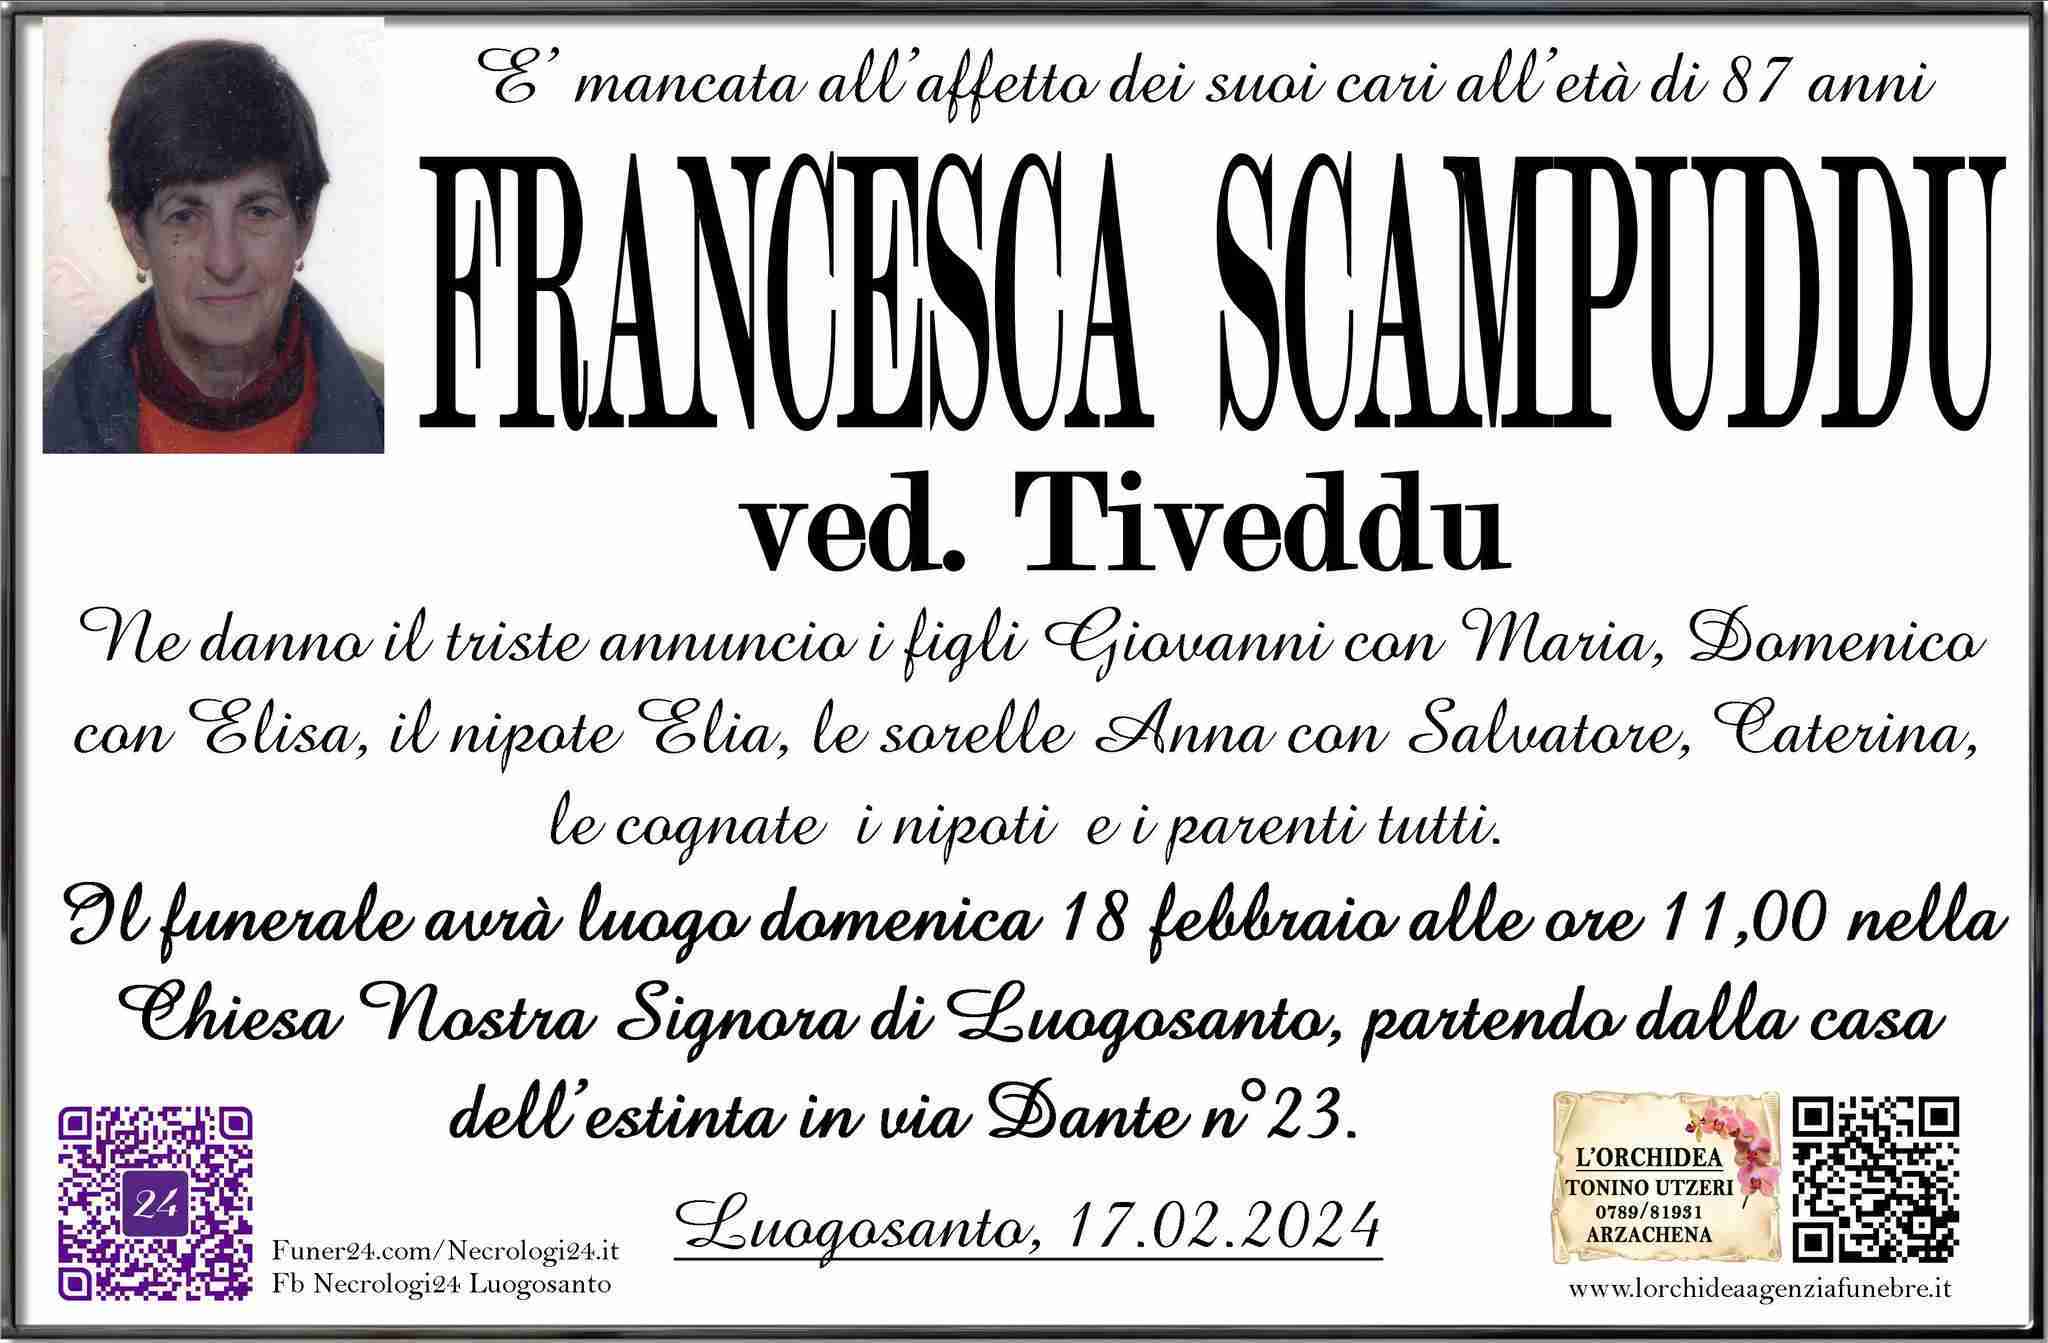 Francesca Scampuddu